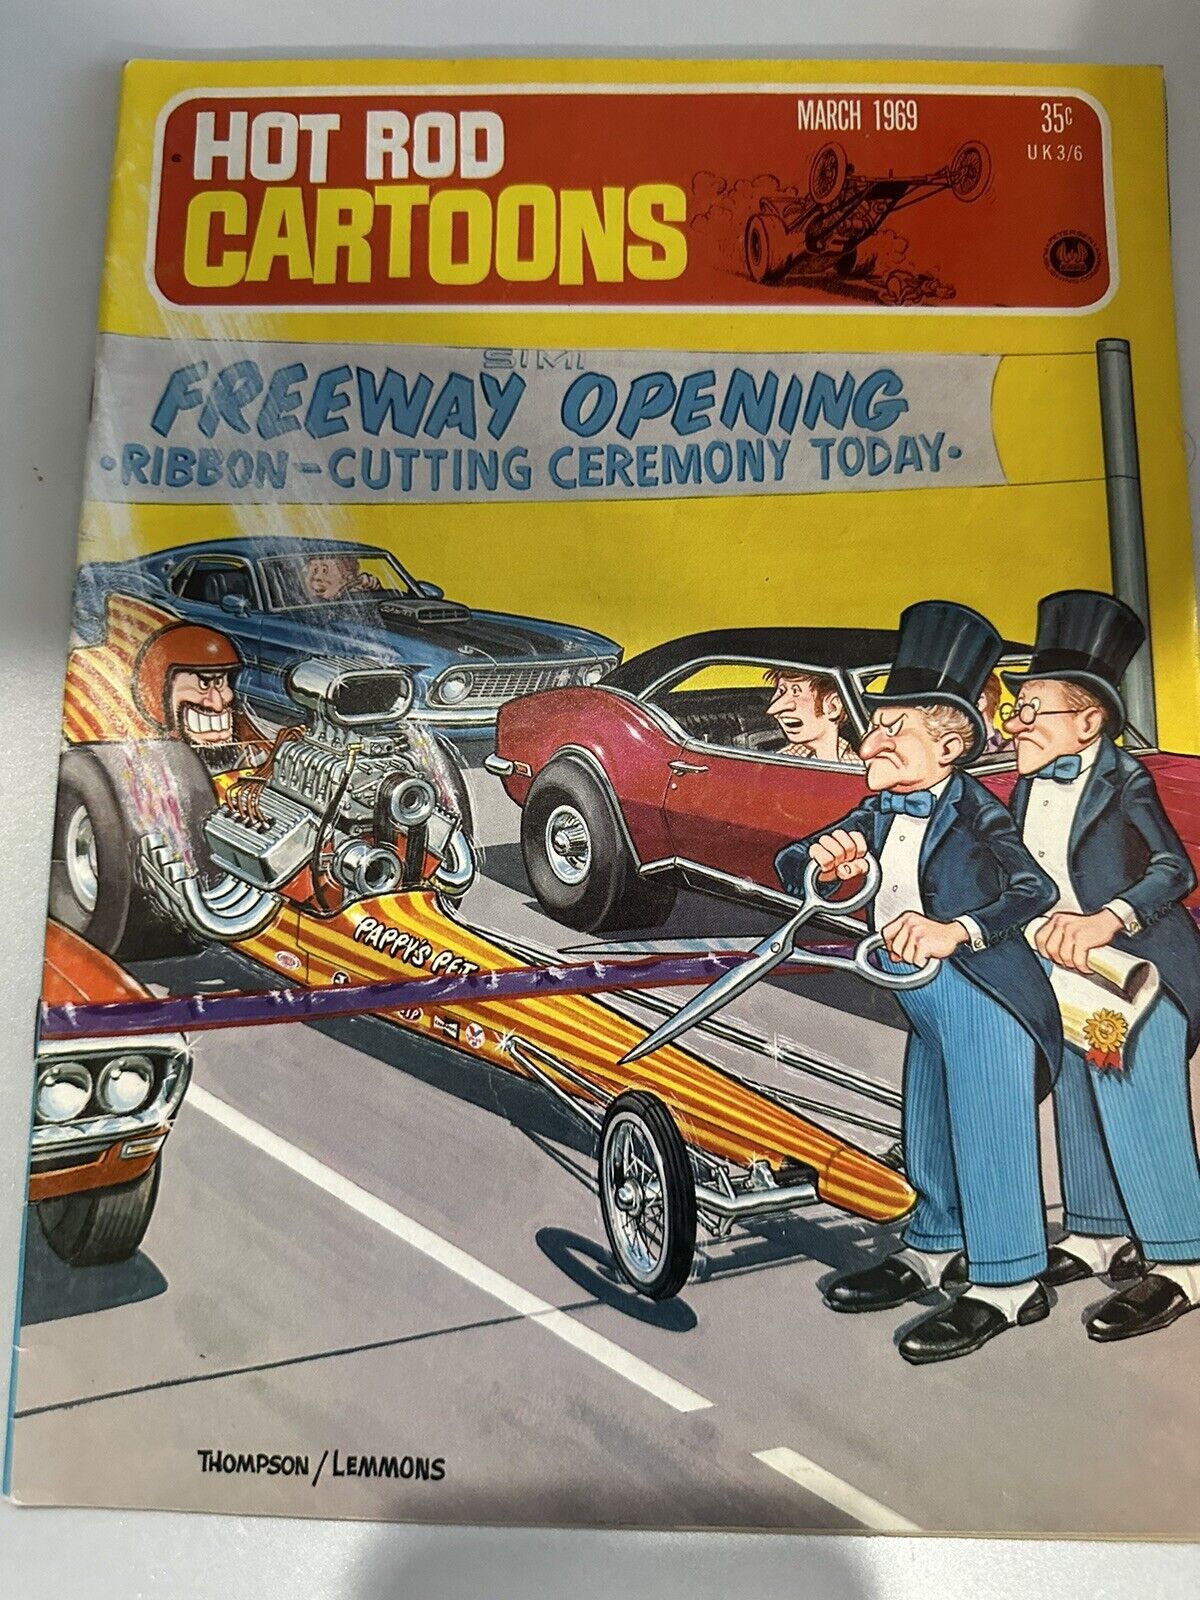 Vtg March 1969 Hot Rod Cartoons Magazine #27  FREEWAY OPENING original owner